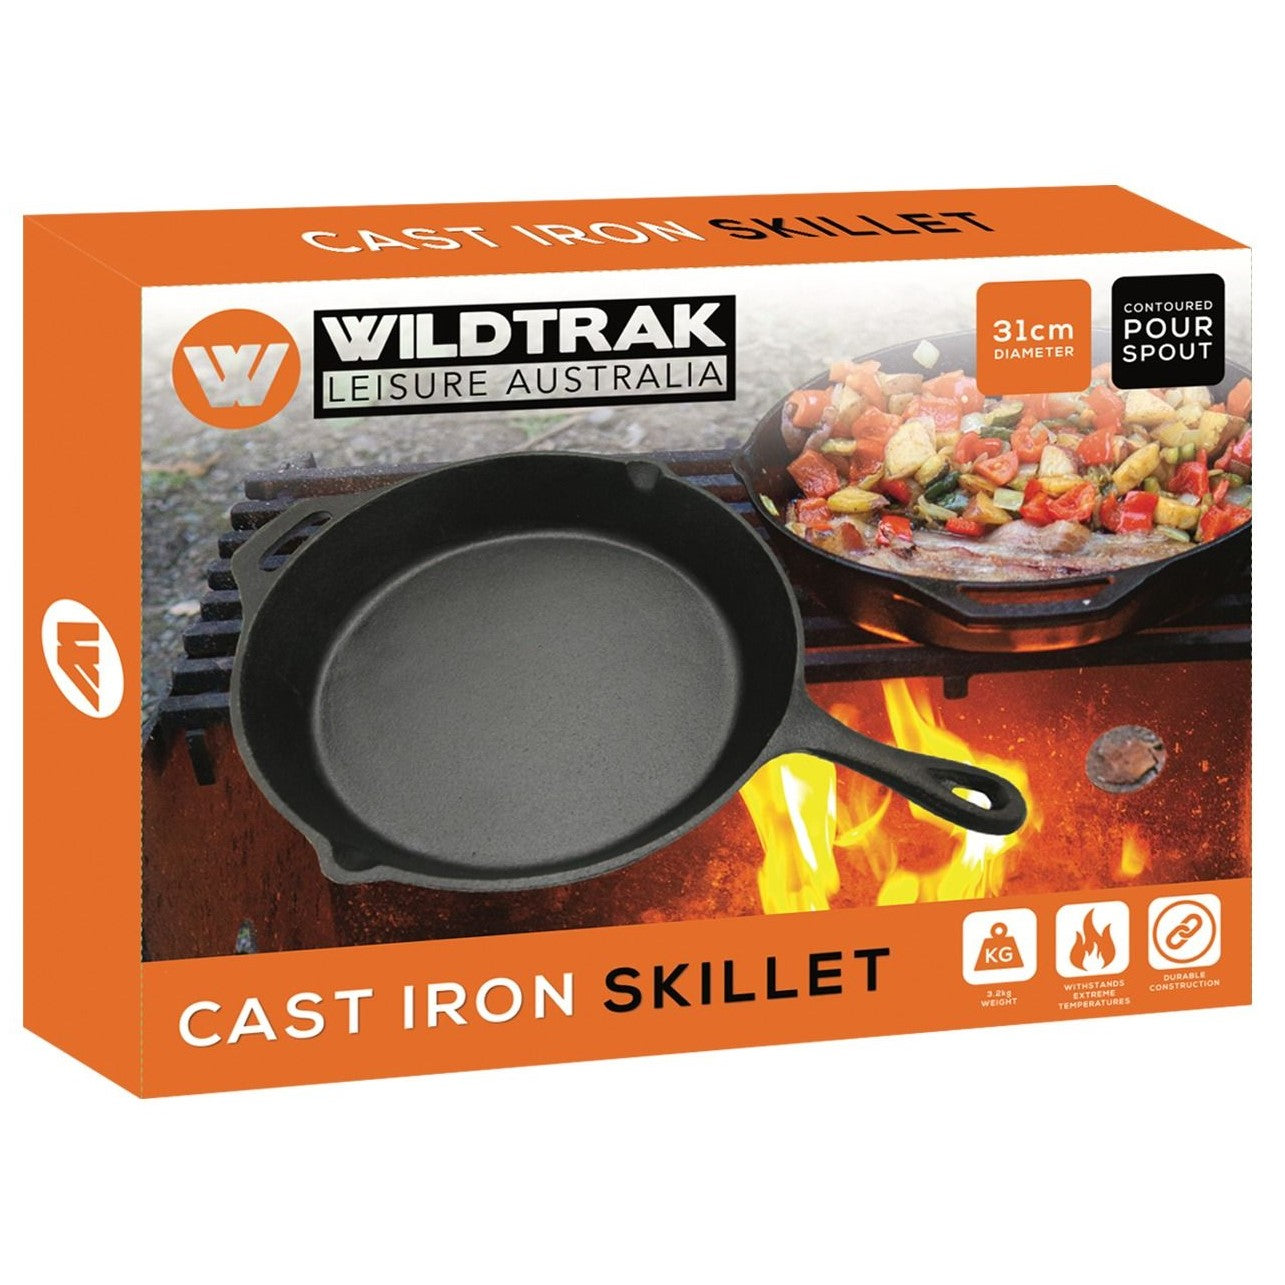 Wildtrak Cast Iron Skillet 31cm